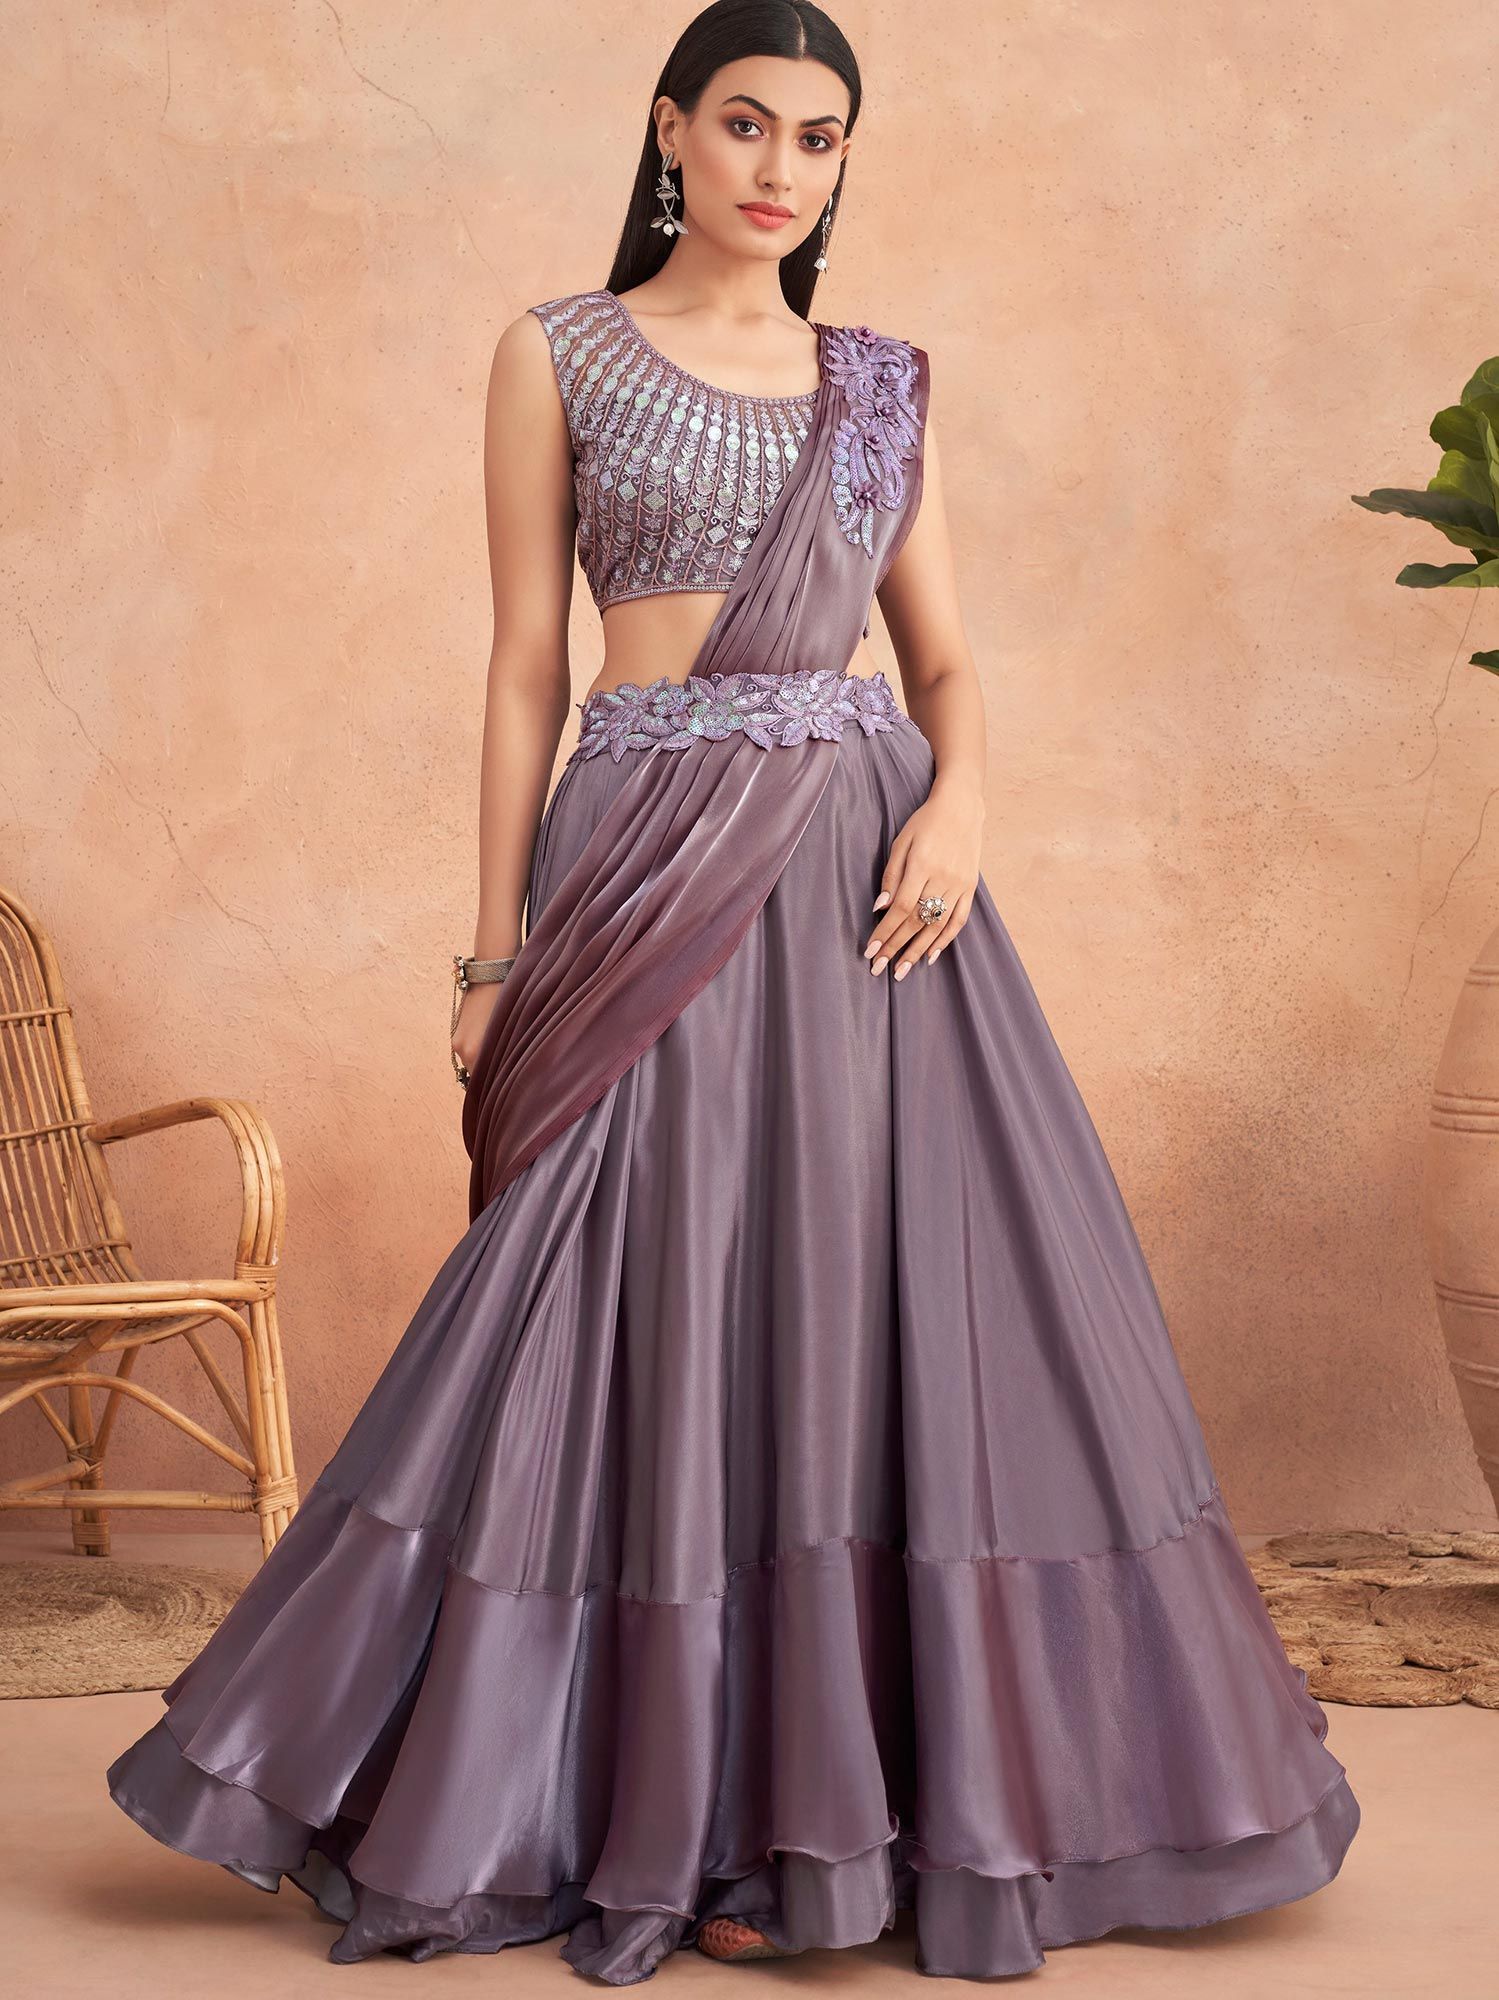 Party wear indian wedding designer saree 9309 | Party wear sarees online,  Saree designs, Indian party wear